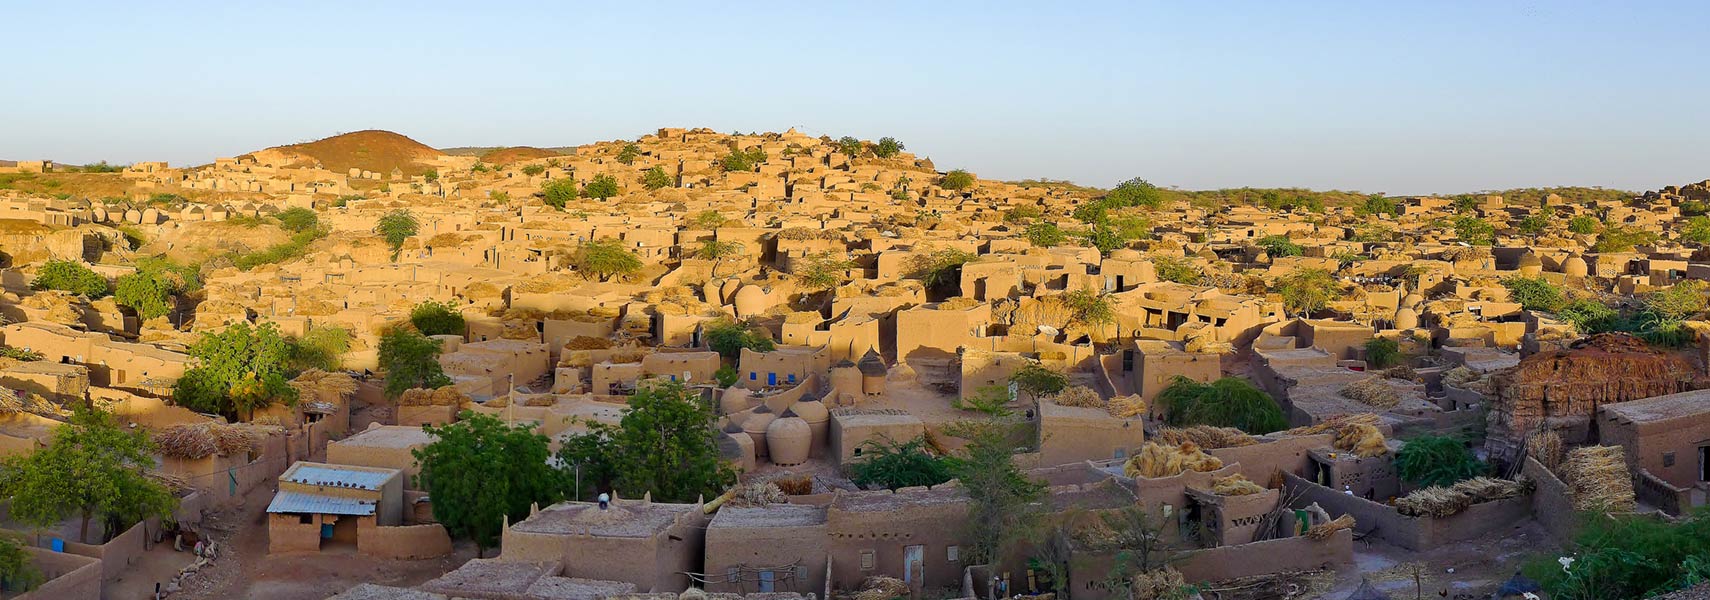 Panorama of Bouza Dosso- Niger Republic